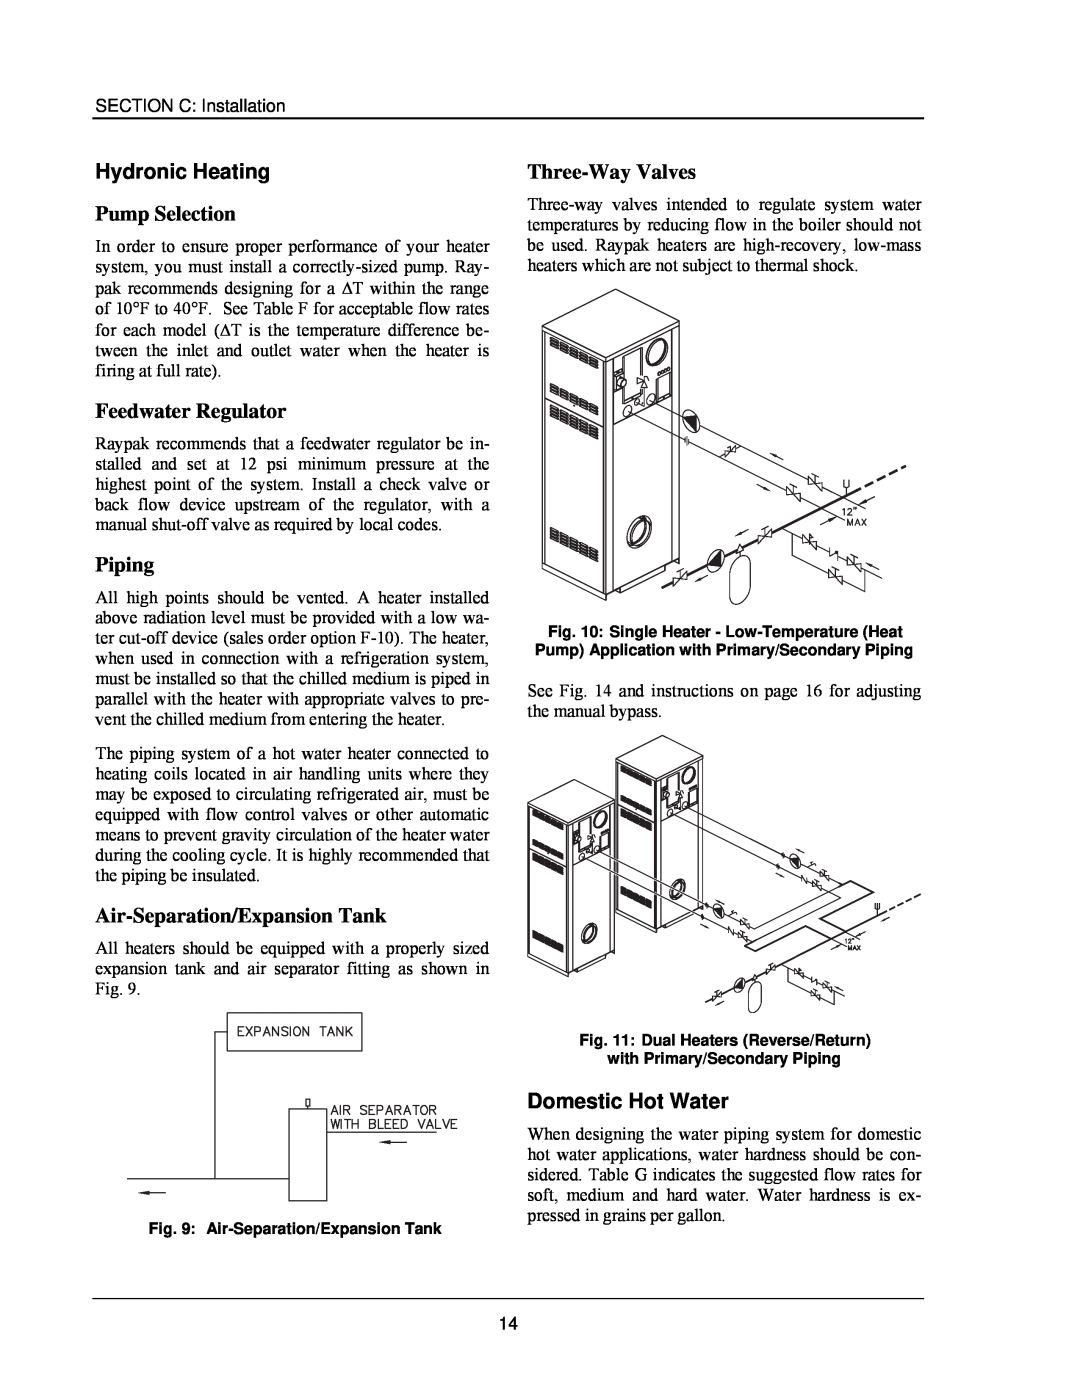 Raypak 503-2003 manual Hydronic Heating, Pump Selection, Feedwater Regulator, Piping, Air-Separation/ExpansionTank 